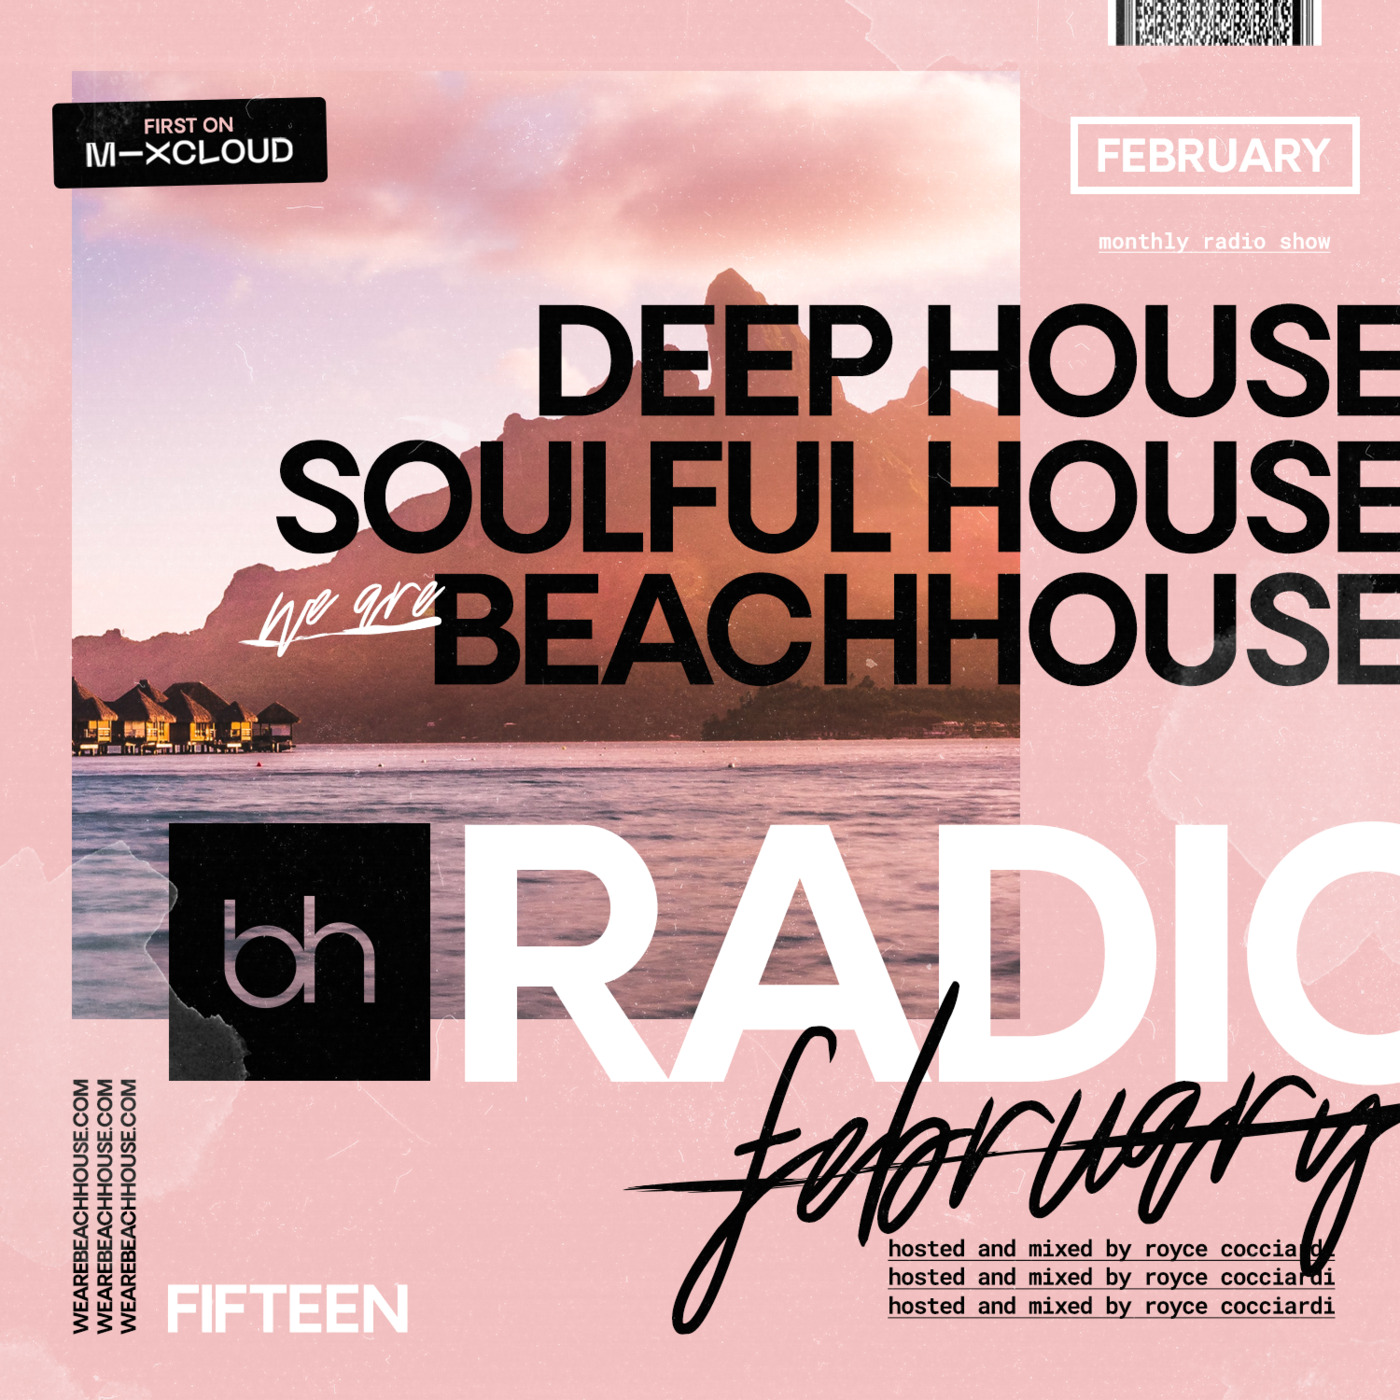 Beachhouse RADIO - February 2021 - Episode 15